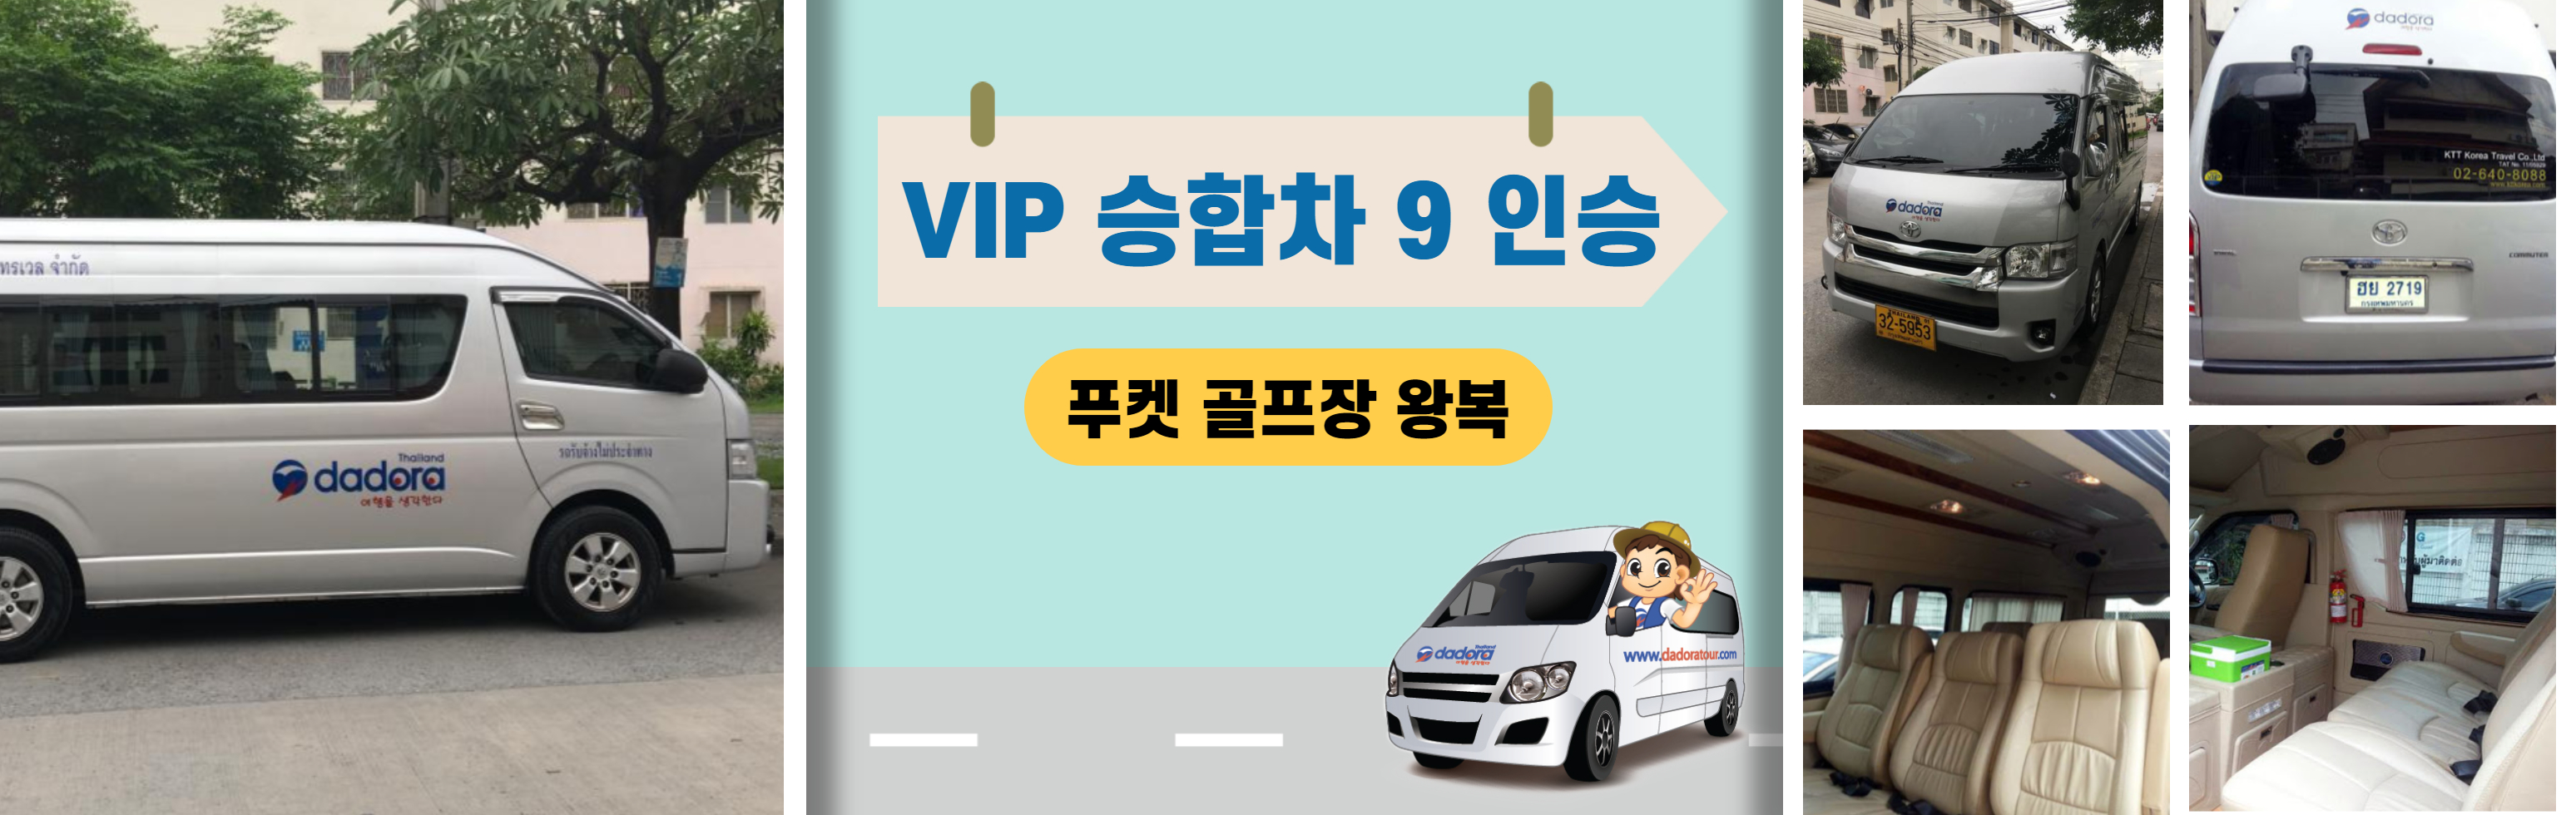 HEAD  VIP 승합차 (9인승) 푸켓 골프장 왕복_1.jpg